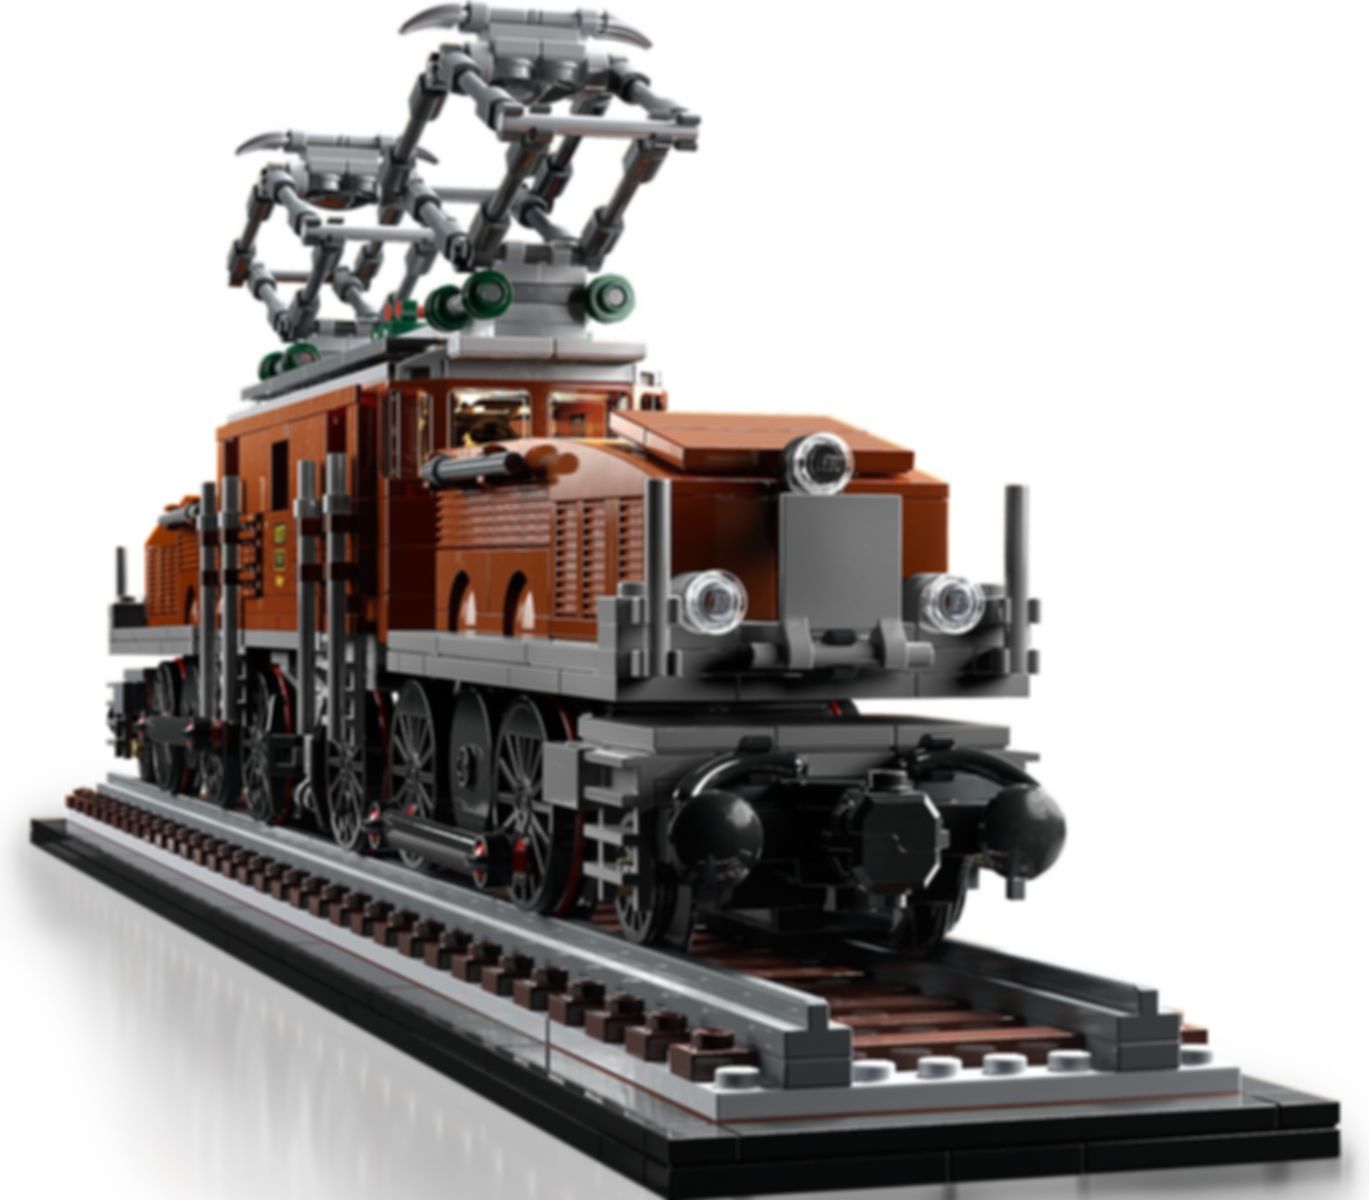 LEGO® Icons Lokomotive "Krokodil" komponenten